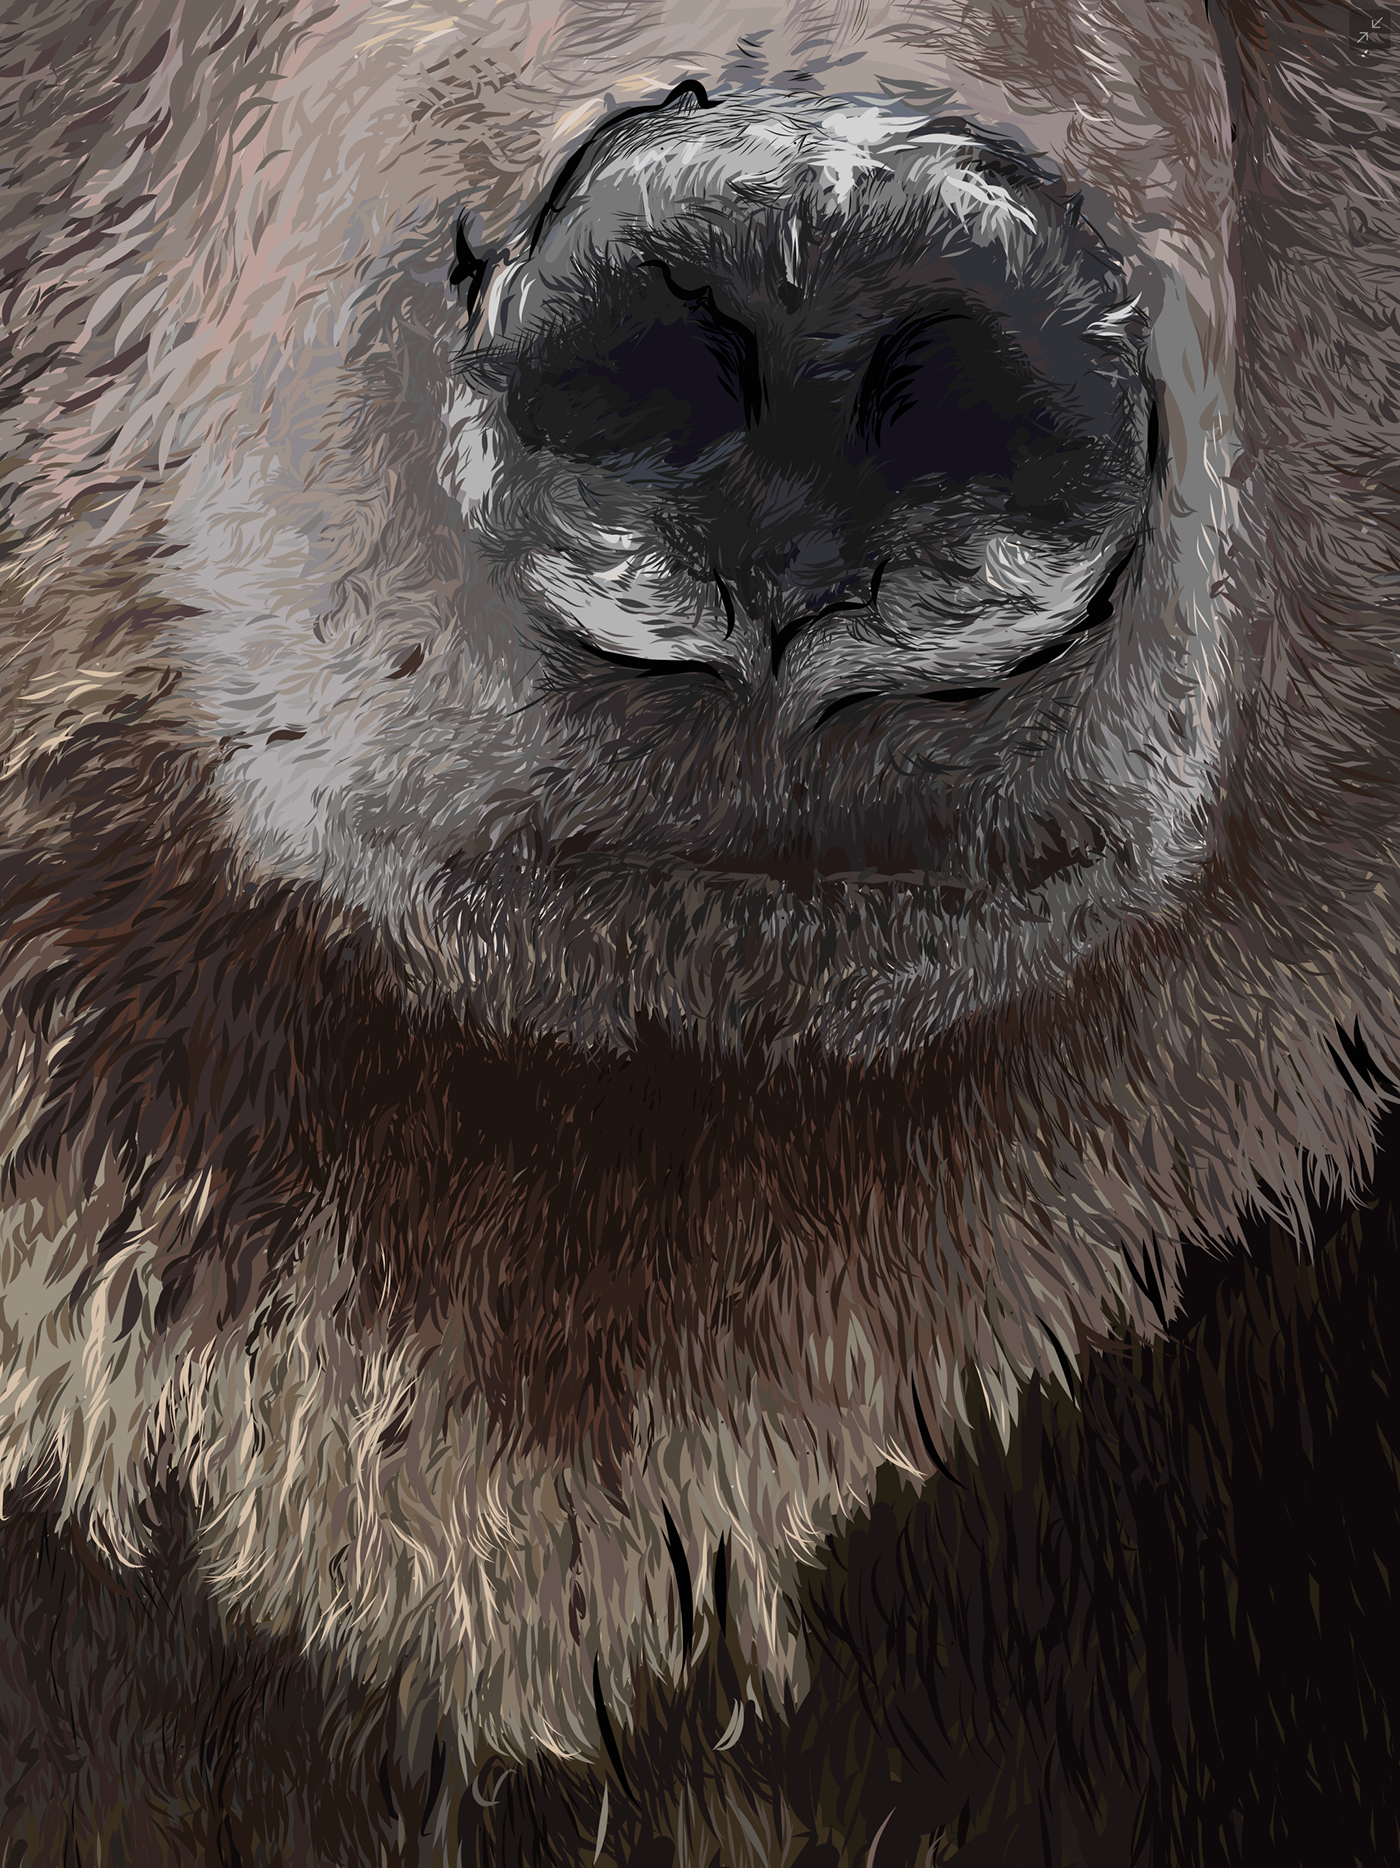 grizzly bear grizzlybear furry Canada rockies alberta Kananaskis brown Nature wildlife wild nose DigitalIllustration ILLUSTRATION  vector vectorart Drawing  detail Fur brownbear